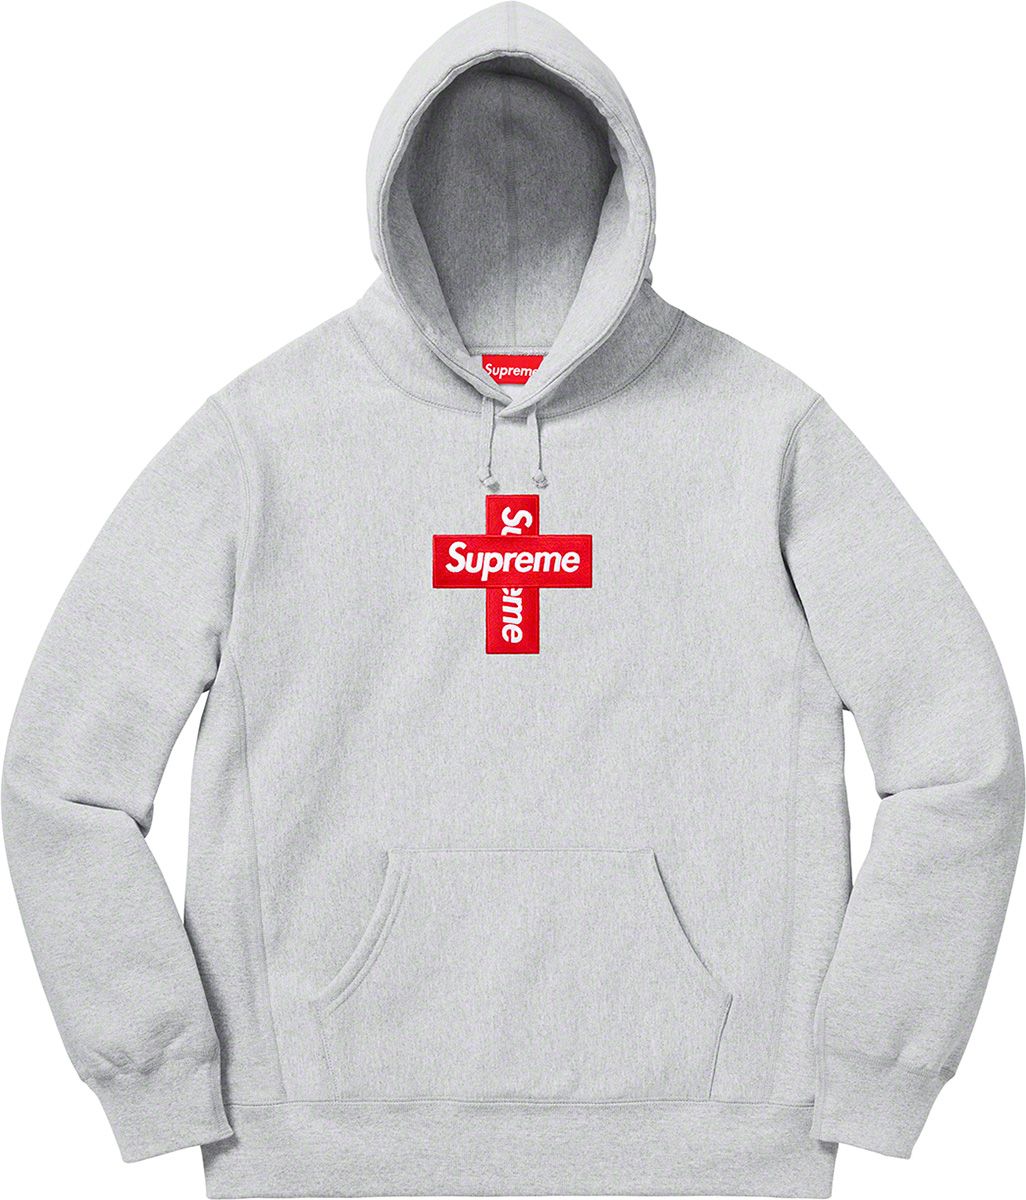 Supreme Cross Box Logo Hooded Sweatshirt色褪せなどはございますか